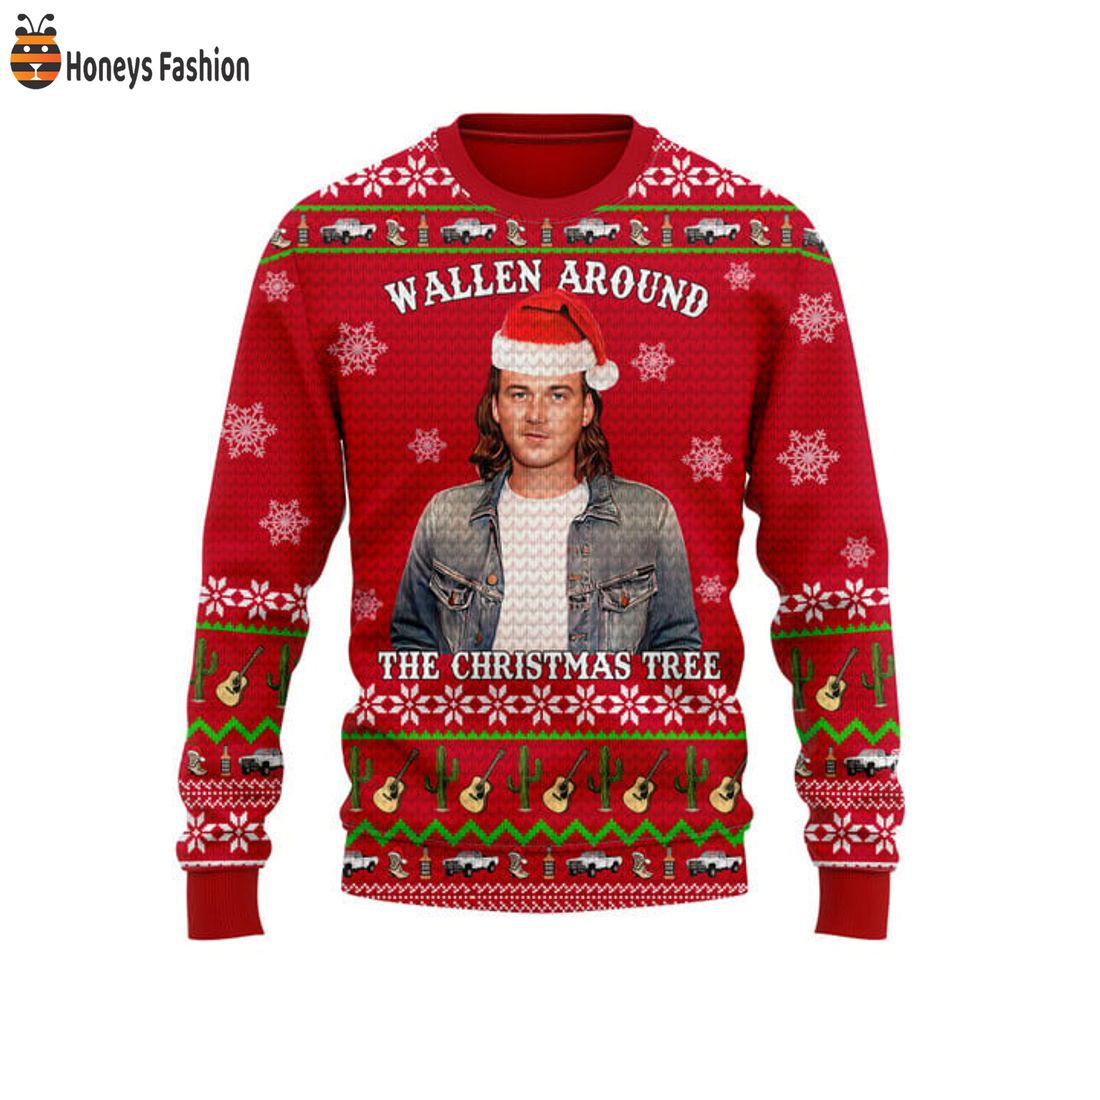 HOT Morgan Wallen Around The Christmas Tree Bull Bull Horns Ugly Christmas Sweater